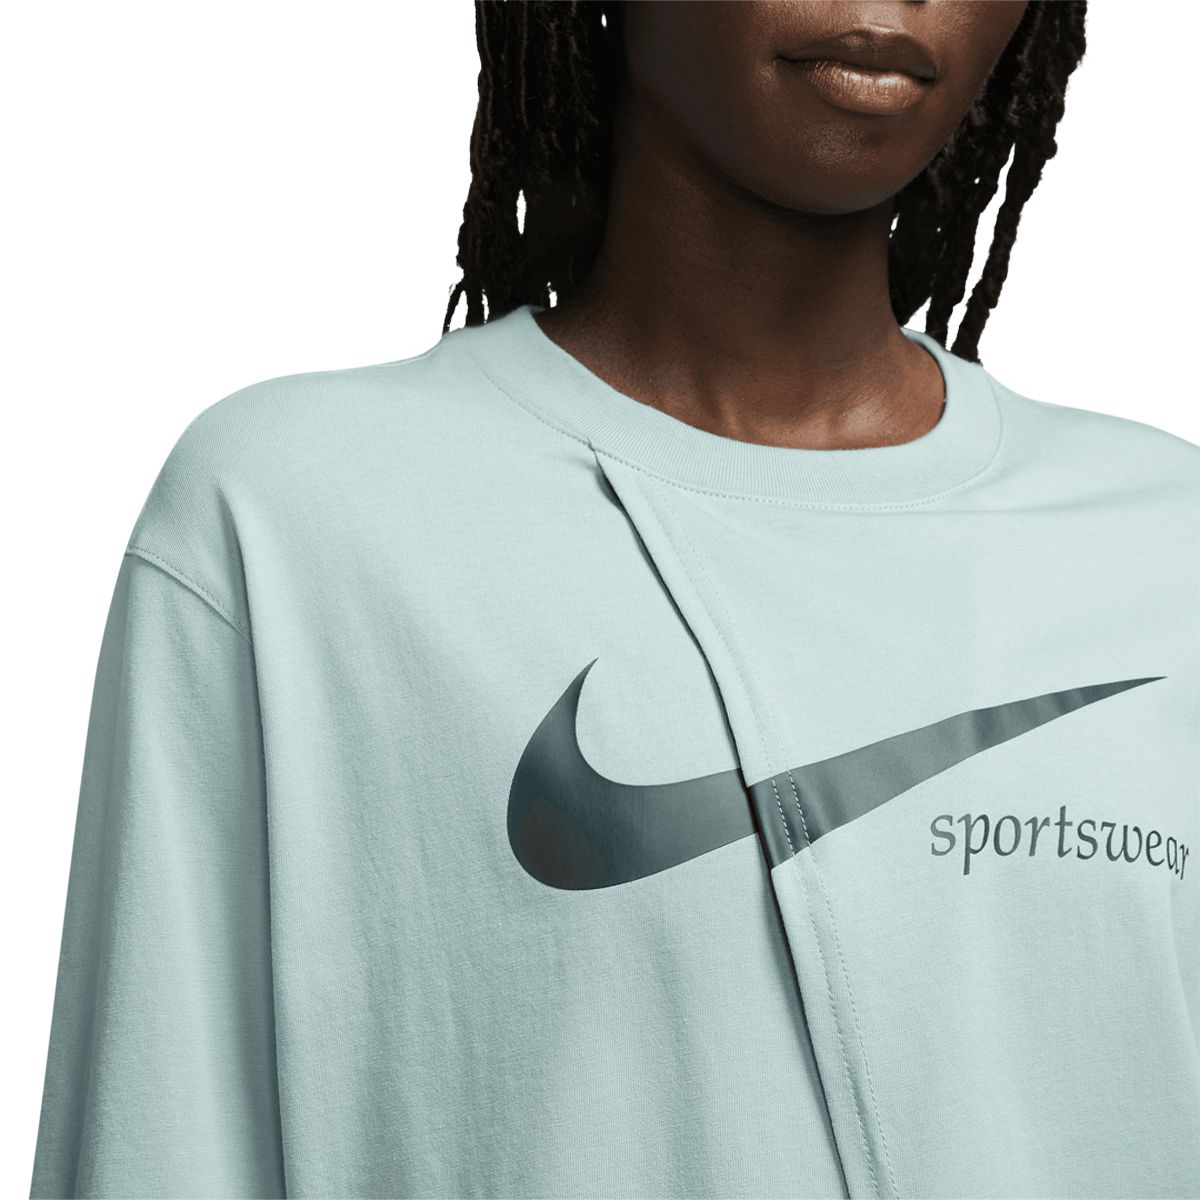 Nike Sportswear Women's Dim D T Shirt